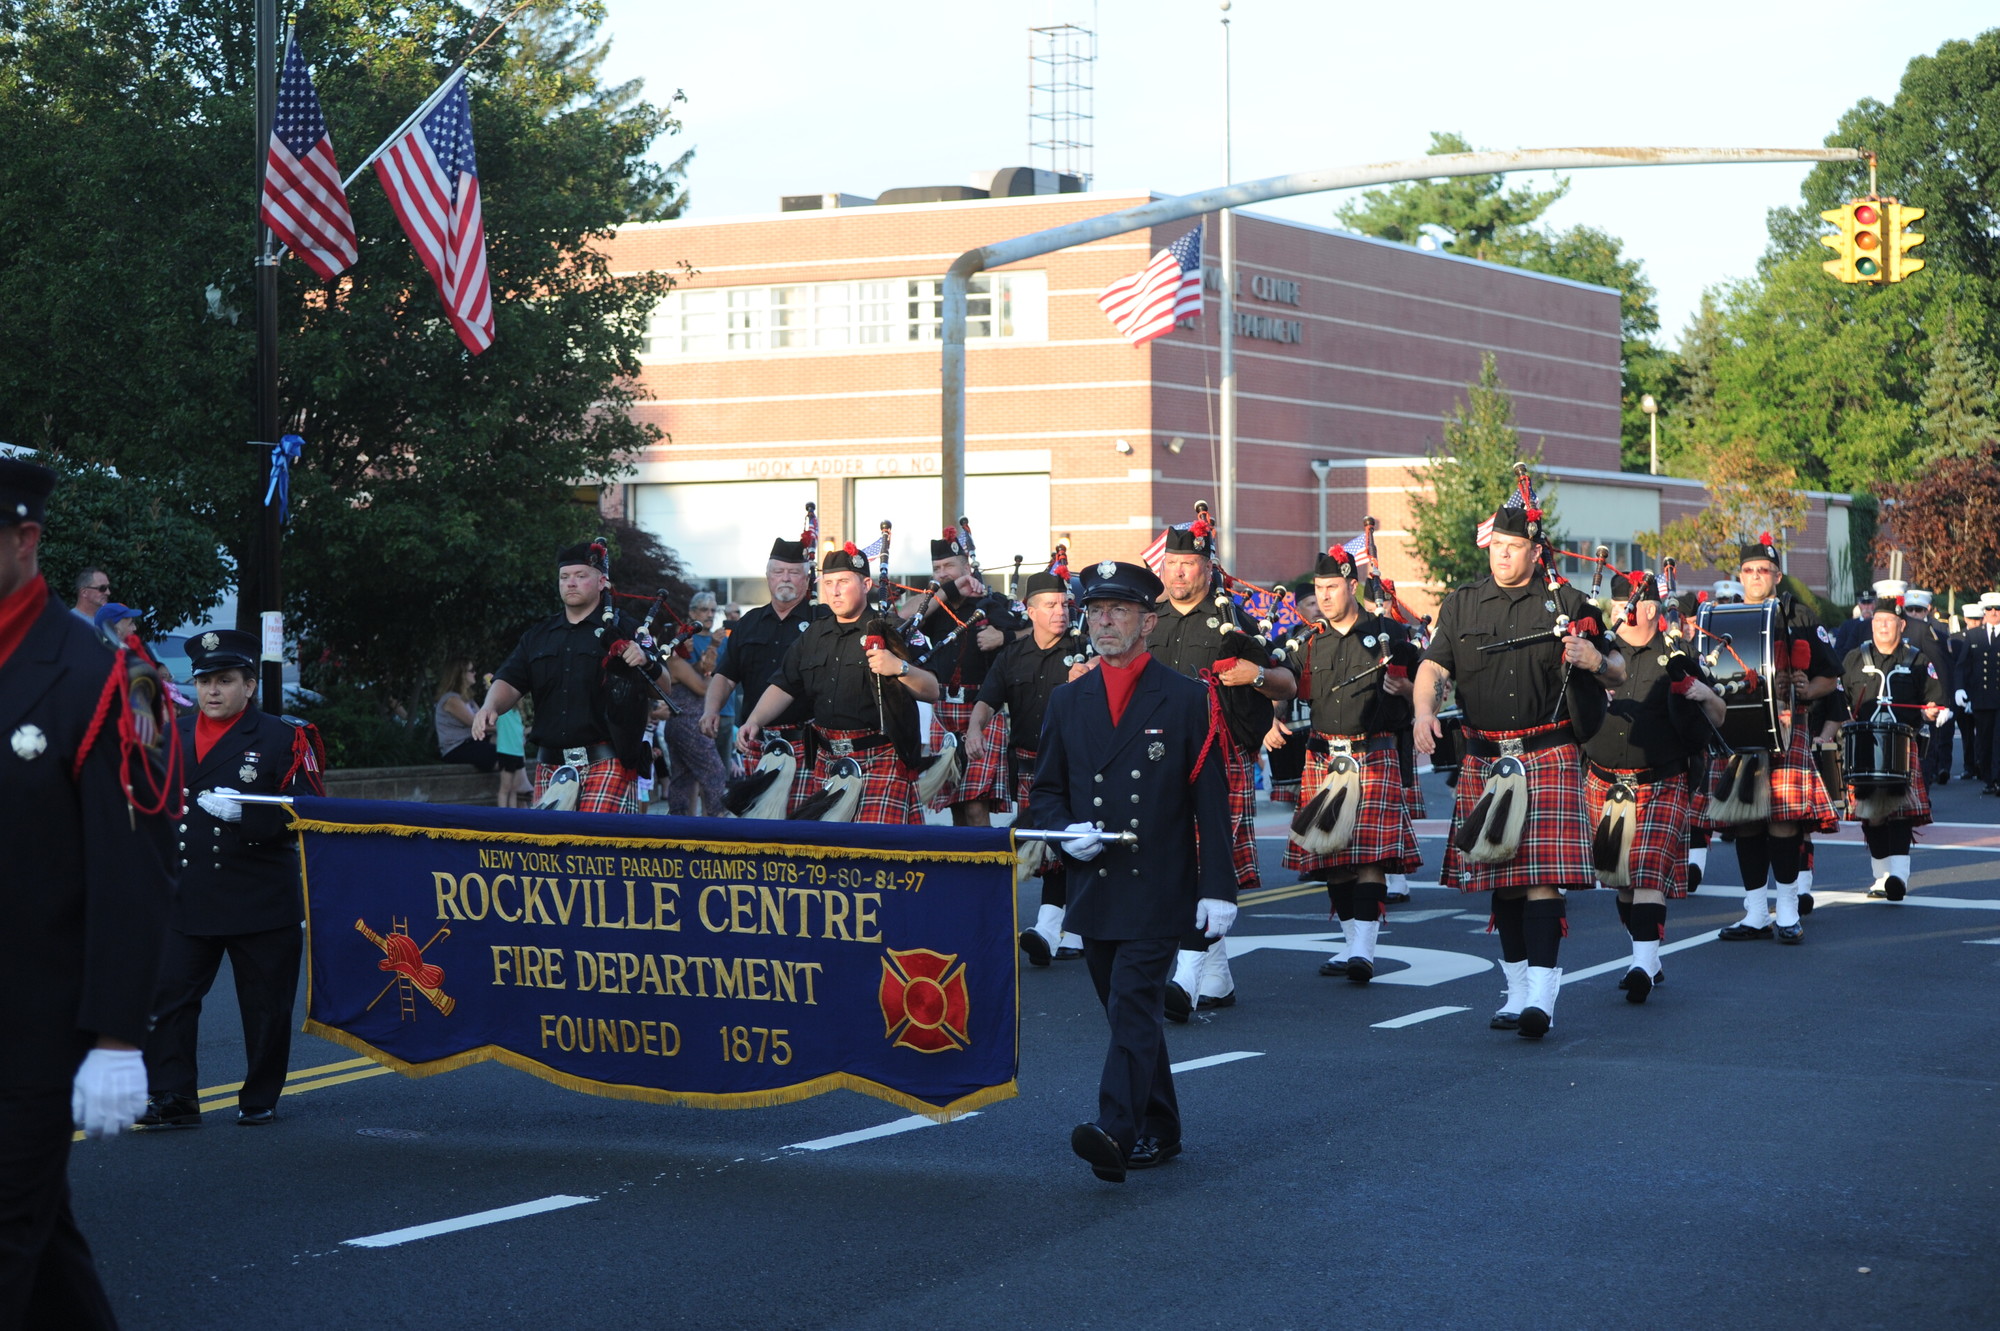 The Rockville Centre Fire Department led the parade down Maple Avenue.